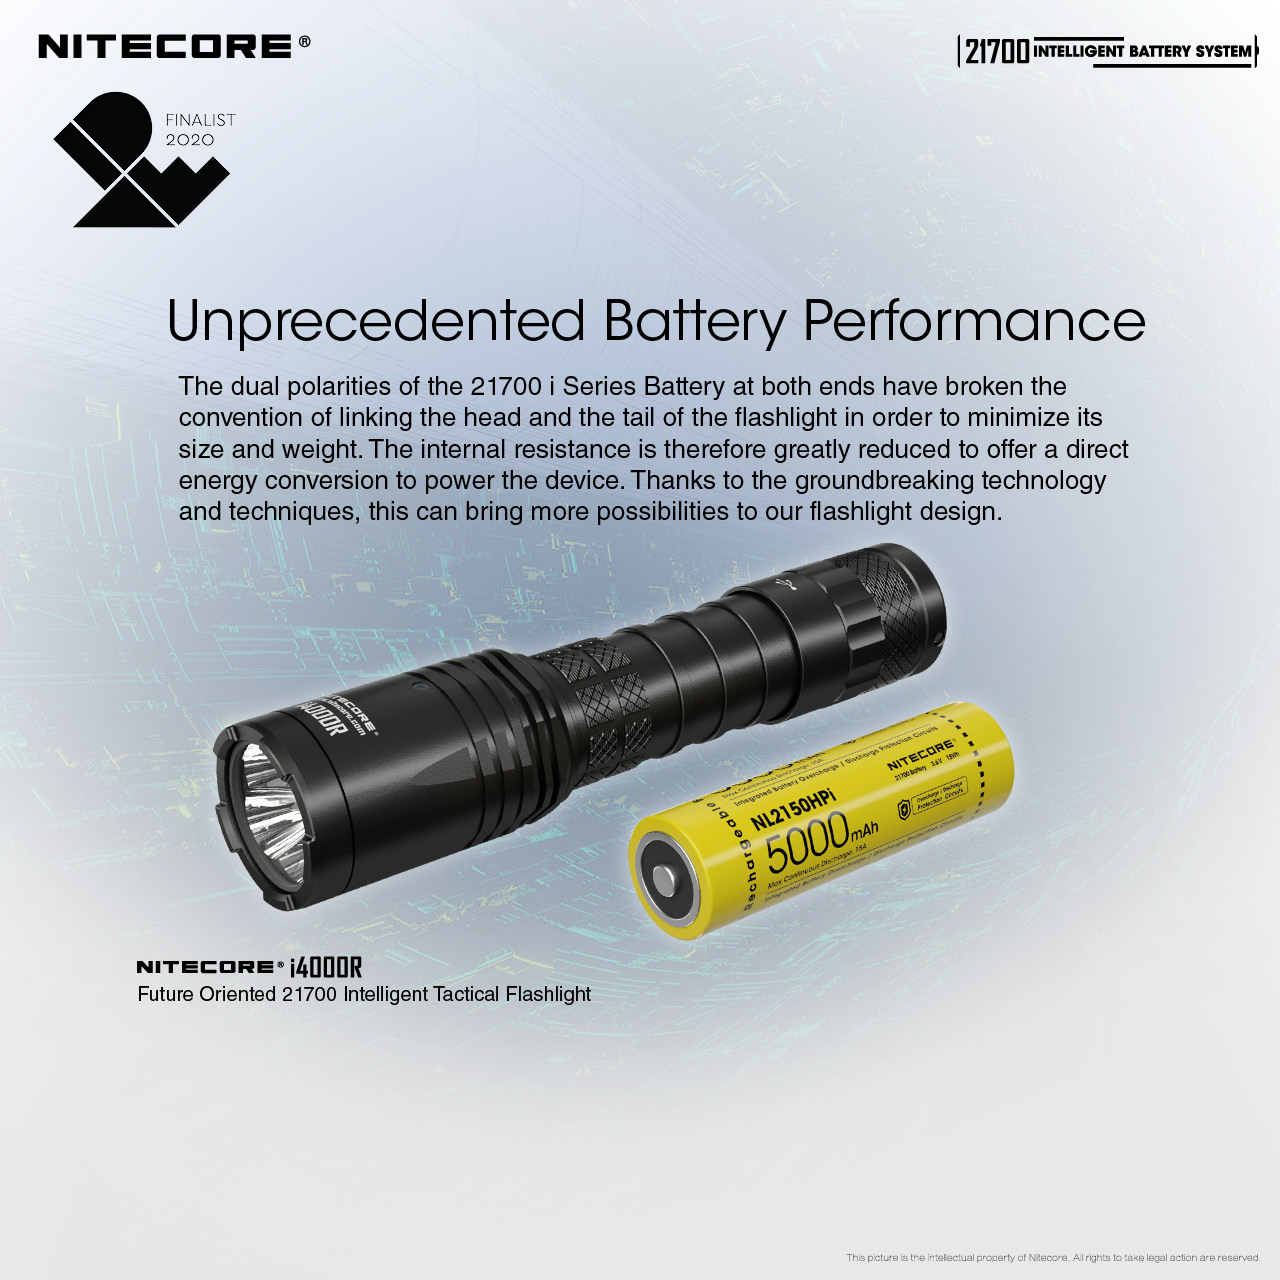 LED NITECORE ML21 Magnetic Light 21700 Intelligent Battery System 4